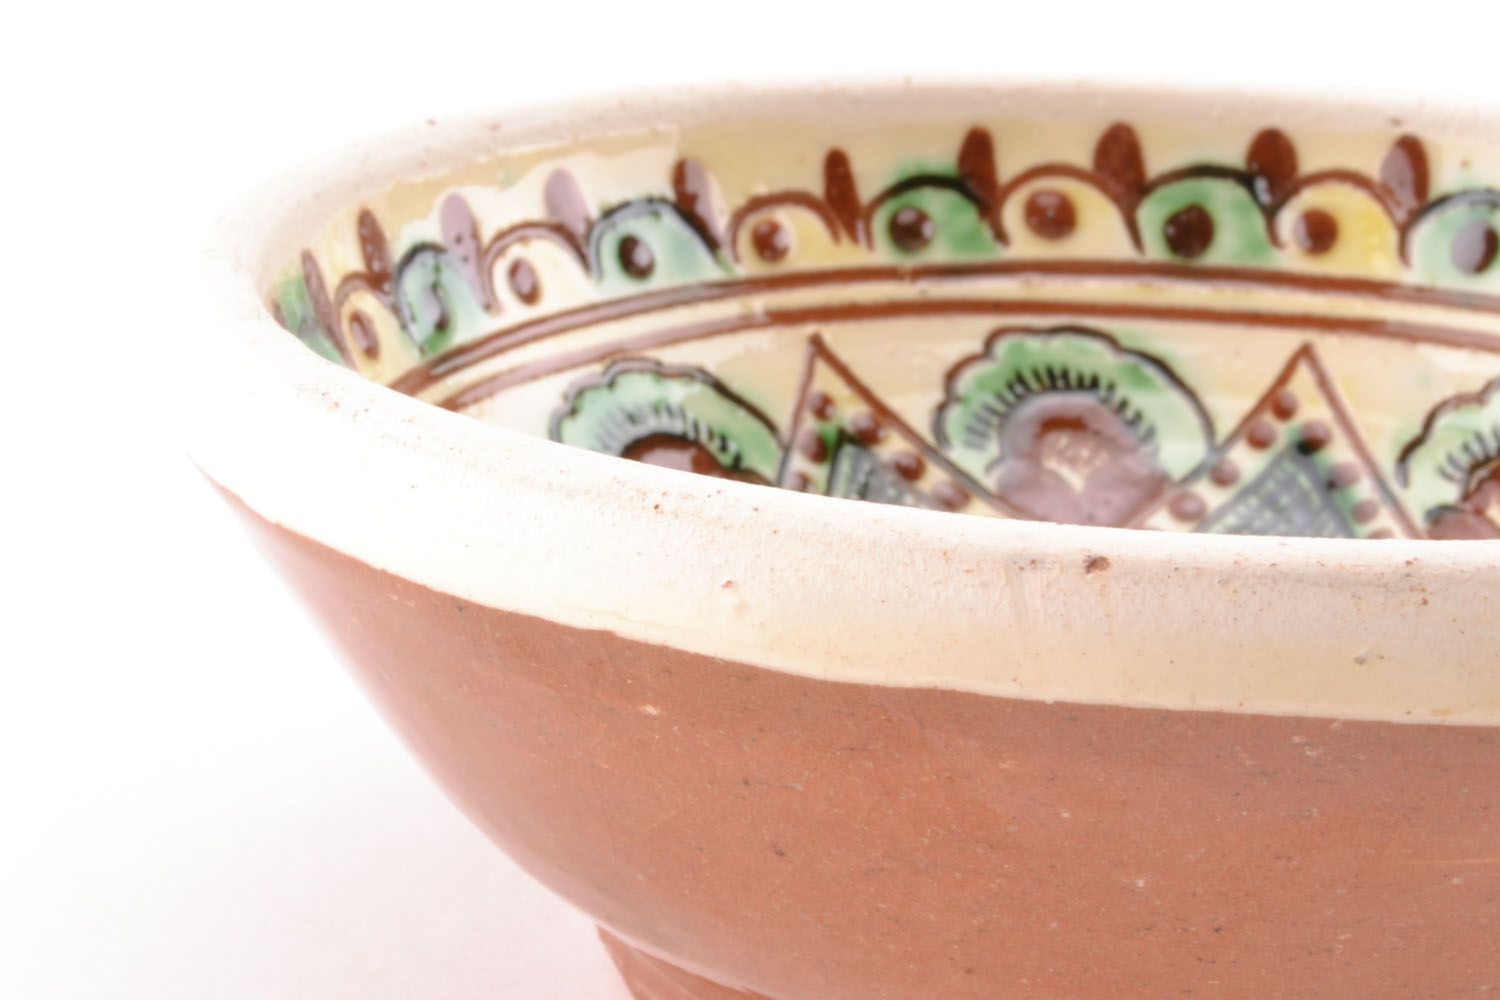 5 8 oz ceramic glazed village-style handmade pitch bowl 0,45 lb photo 4